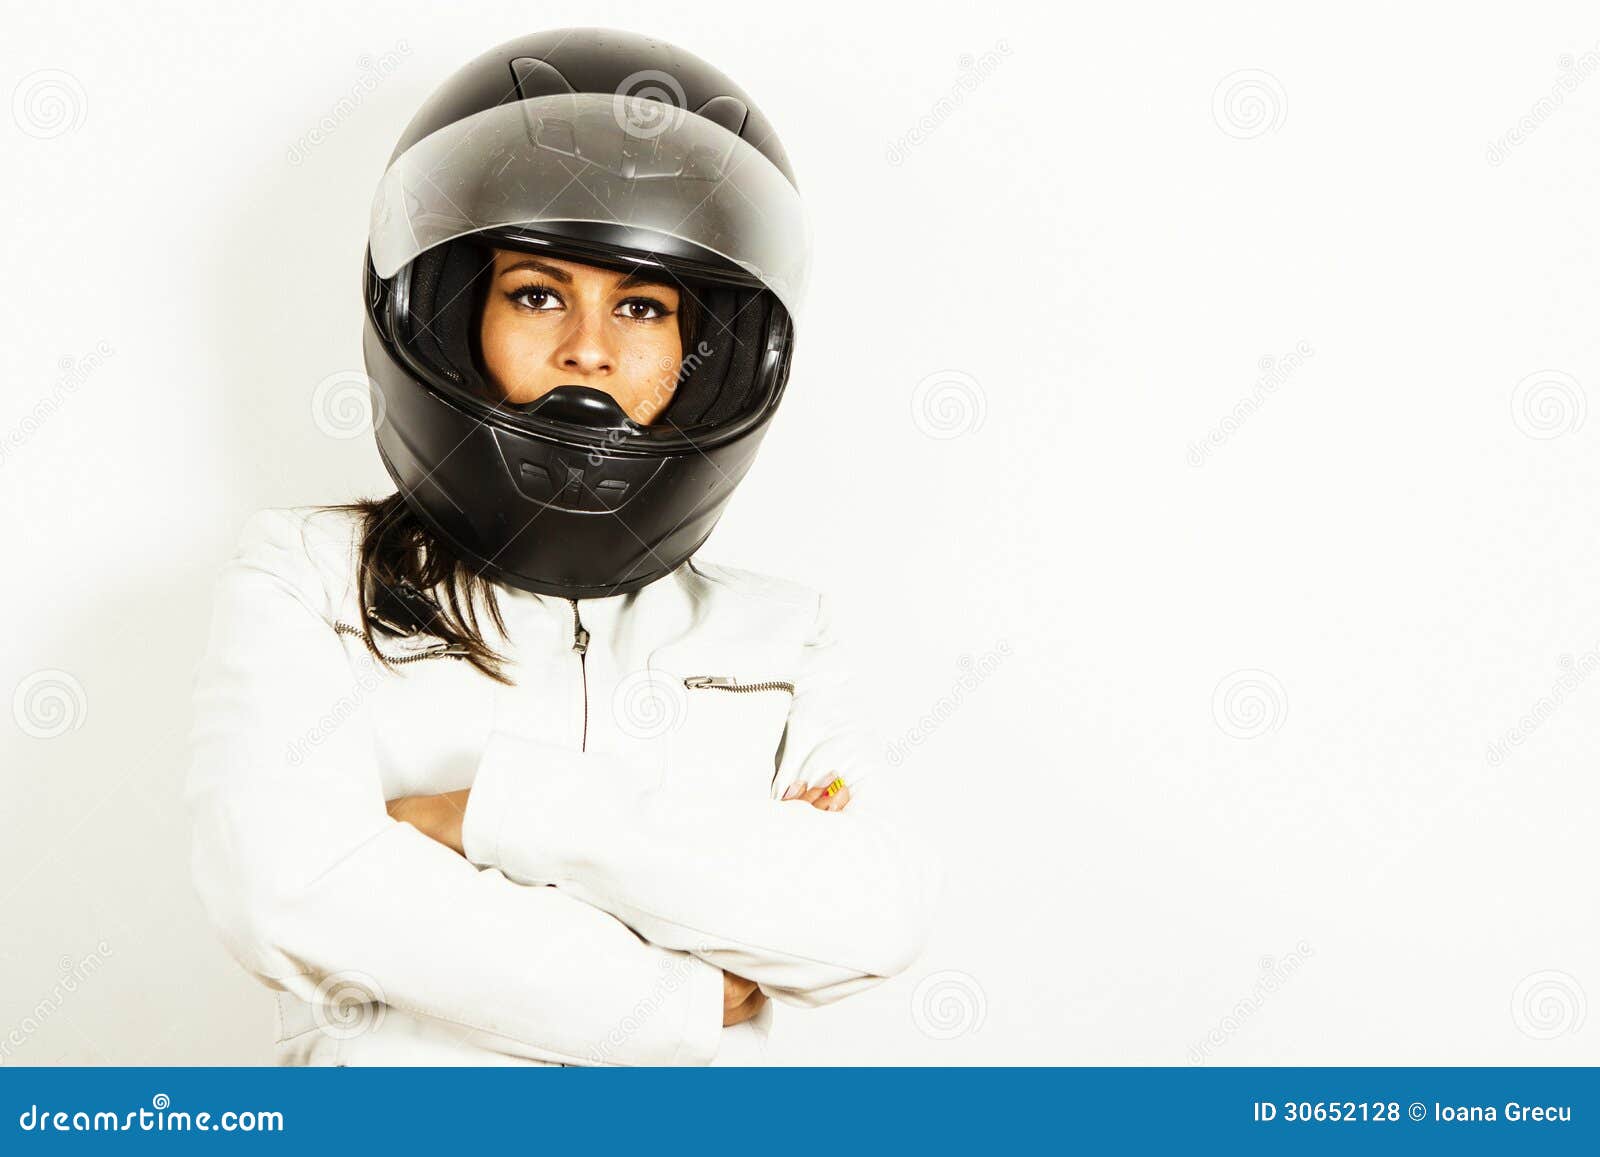 woman motorcyclist